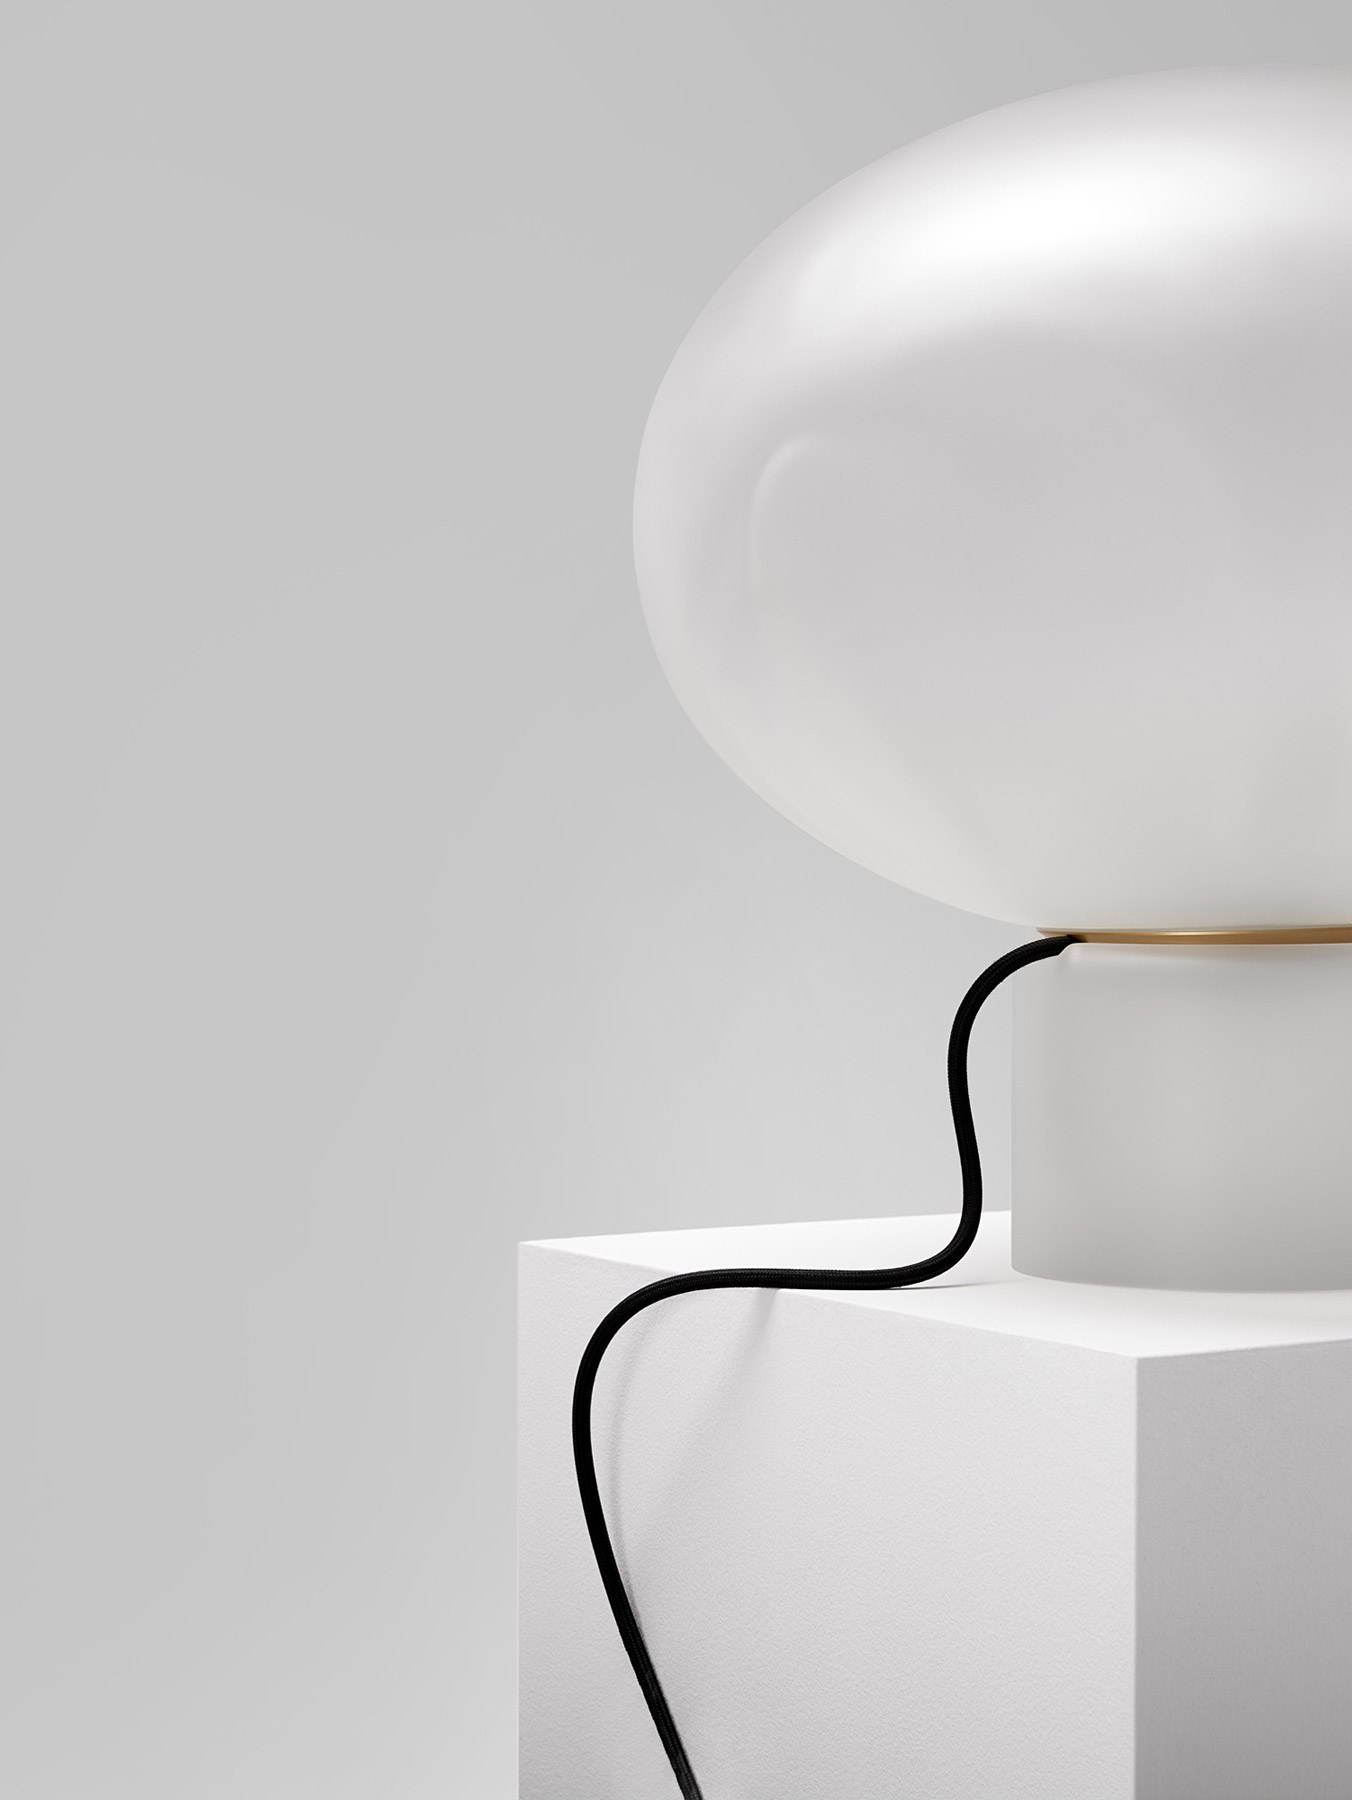 Méne Table Lamp by Ross Gardam